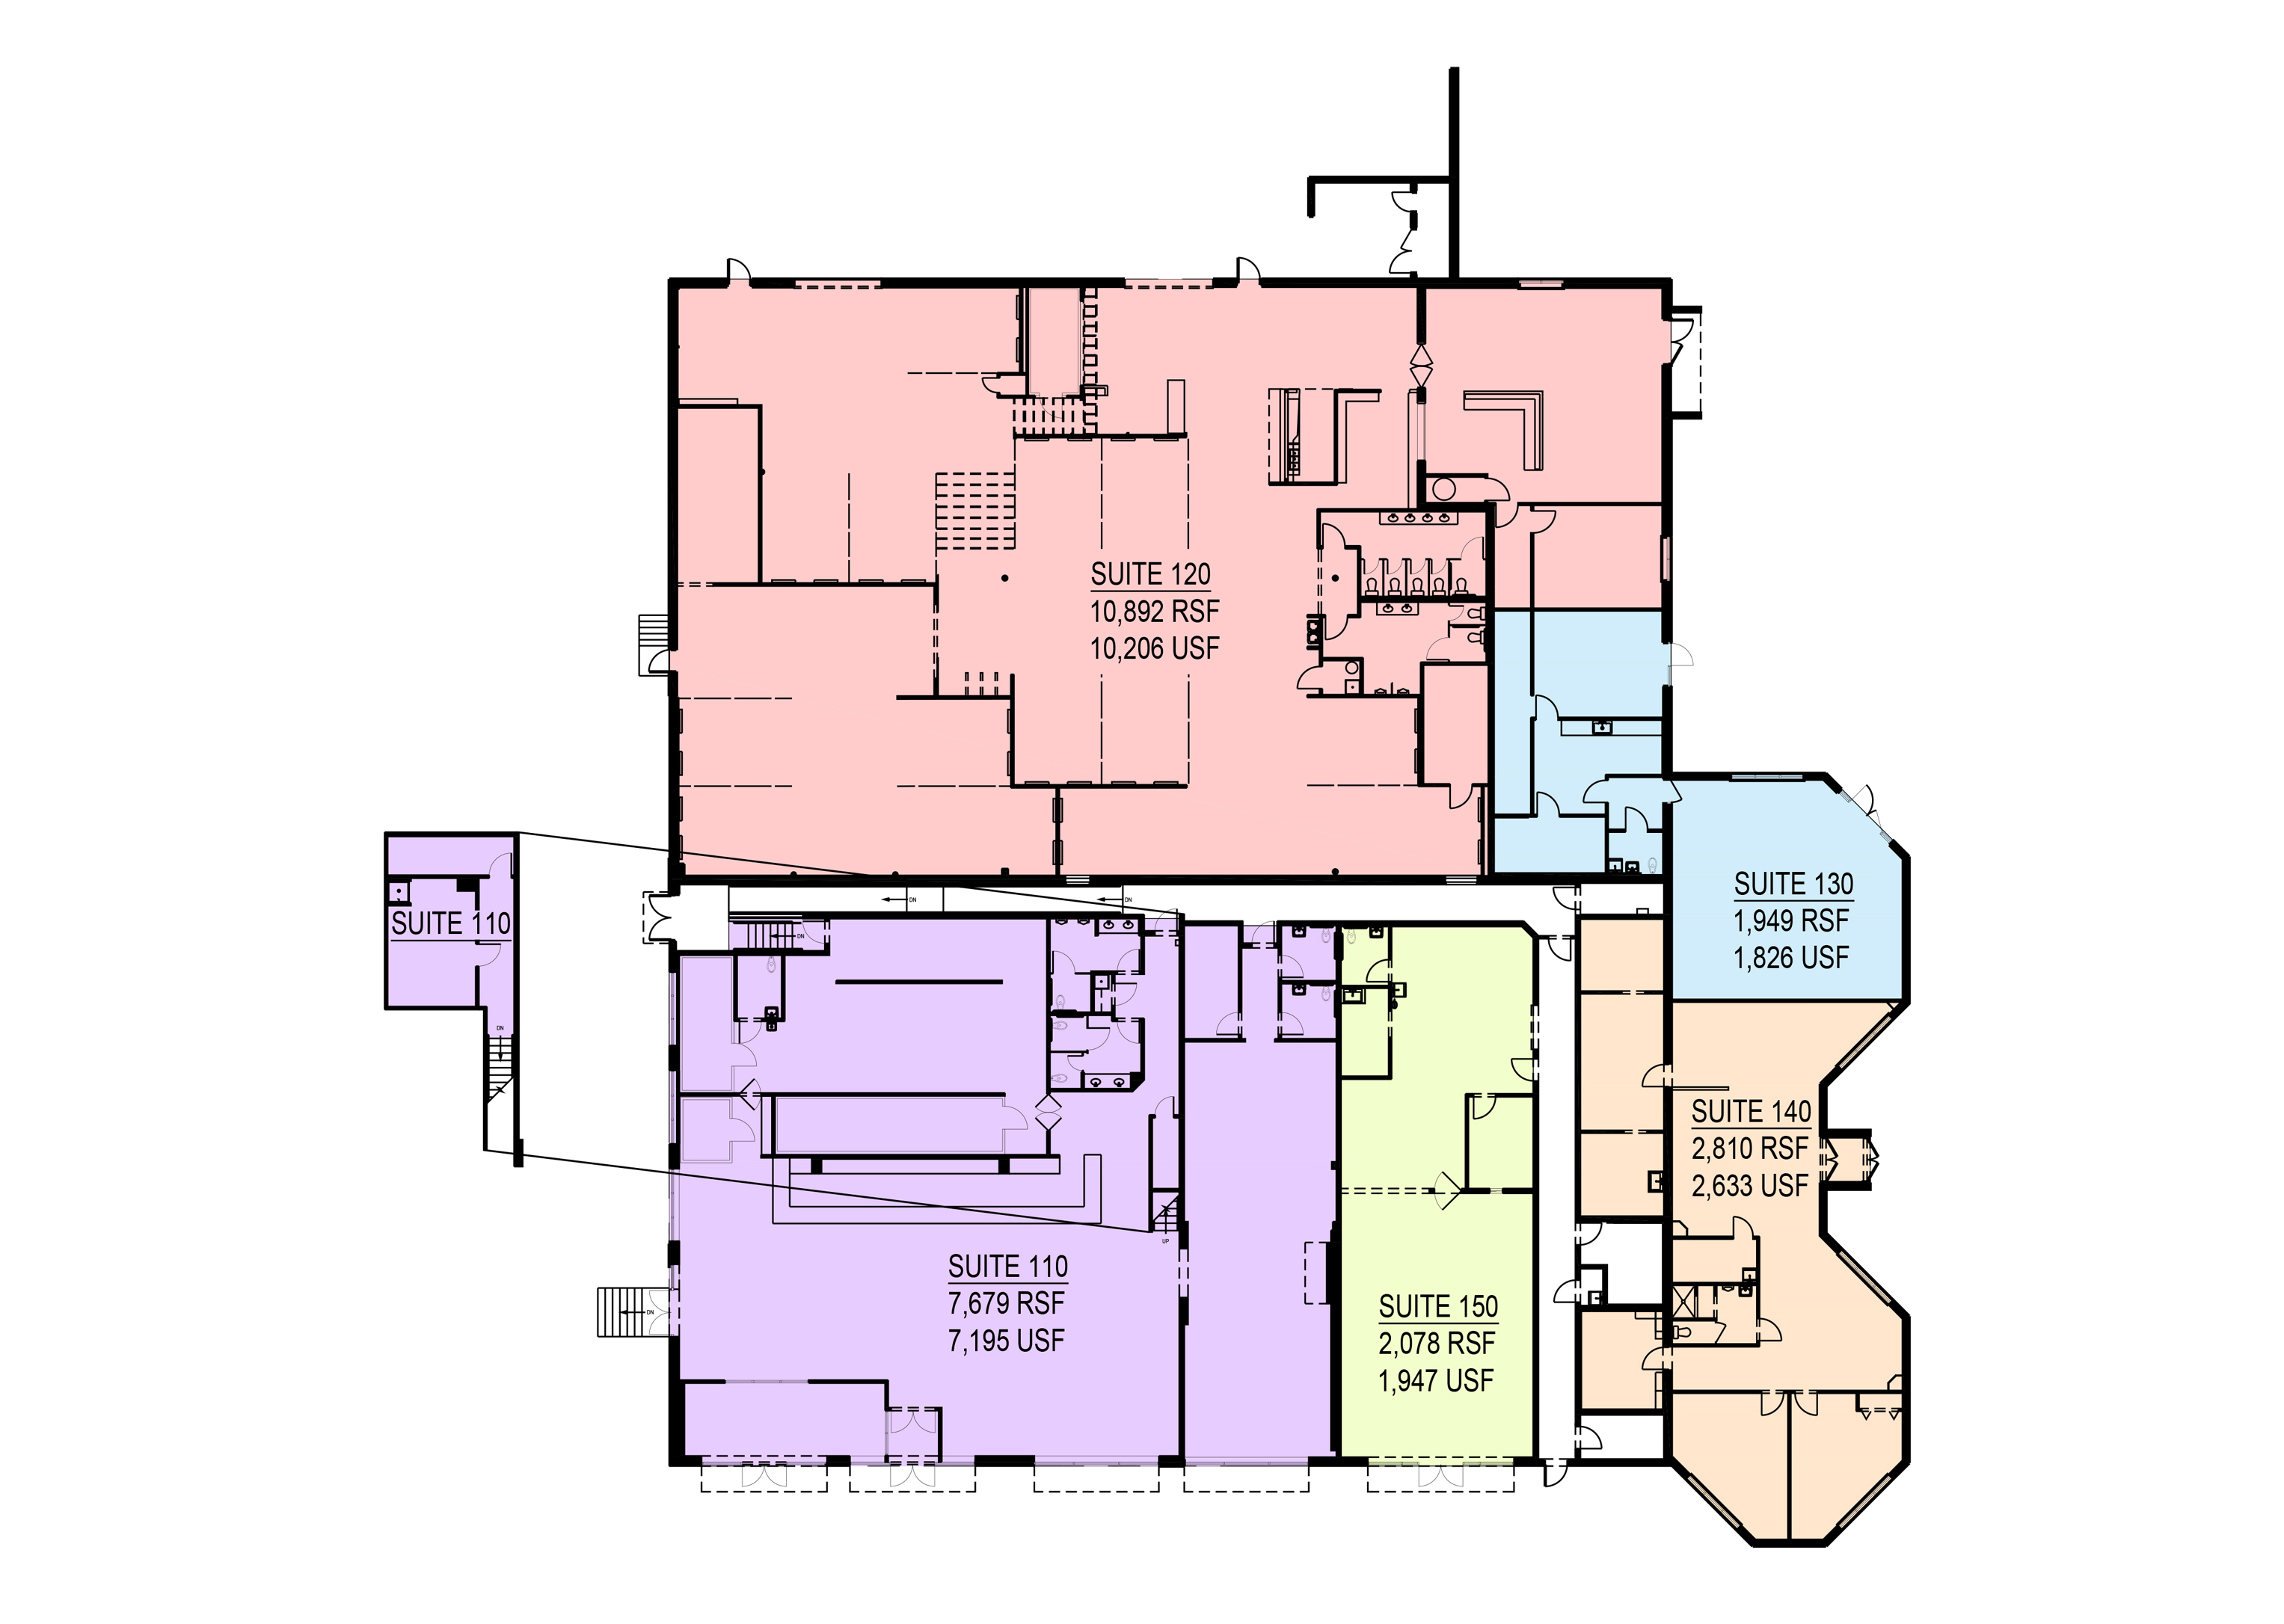 BOMA Measurements Help Landlords Reposition Properties · Arium|AE ·  Architecture, Engineering, & Planning